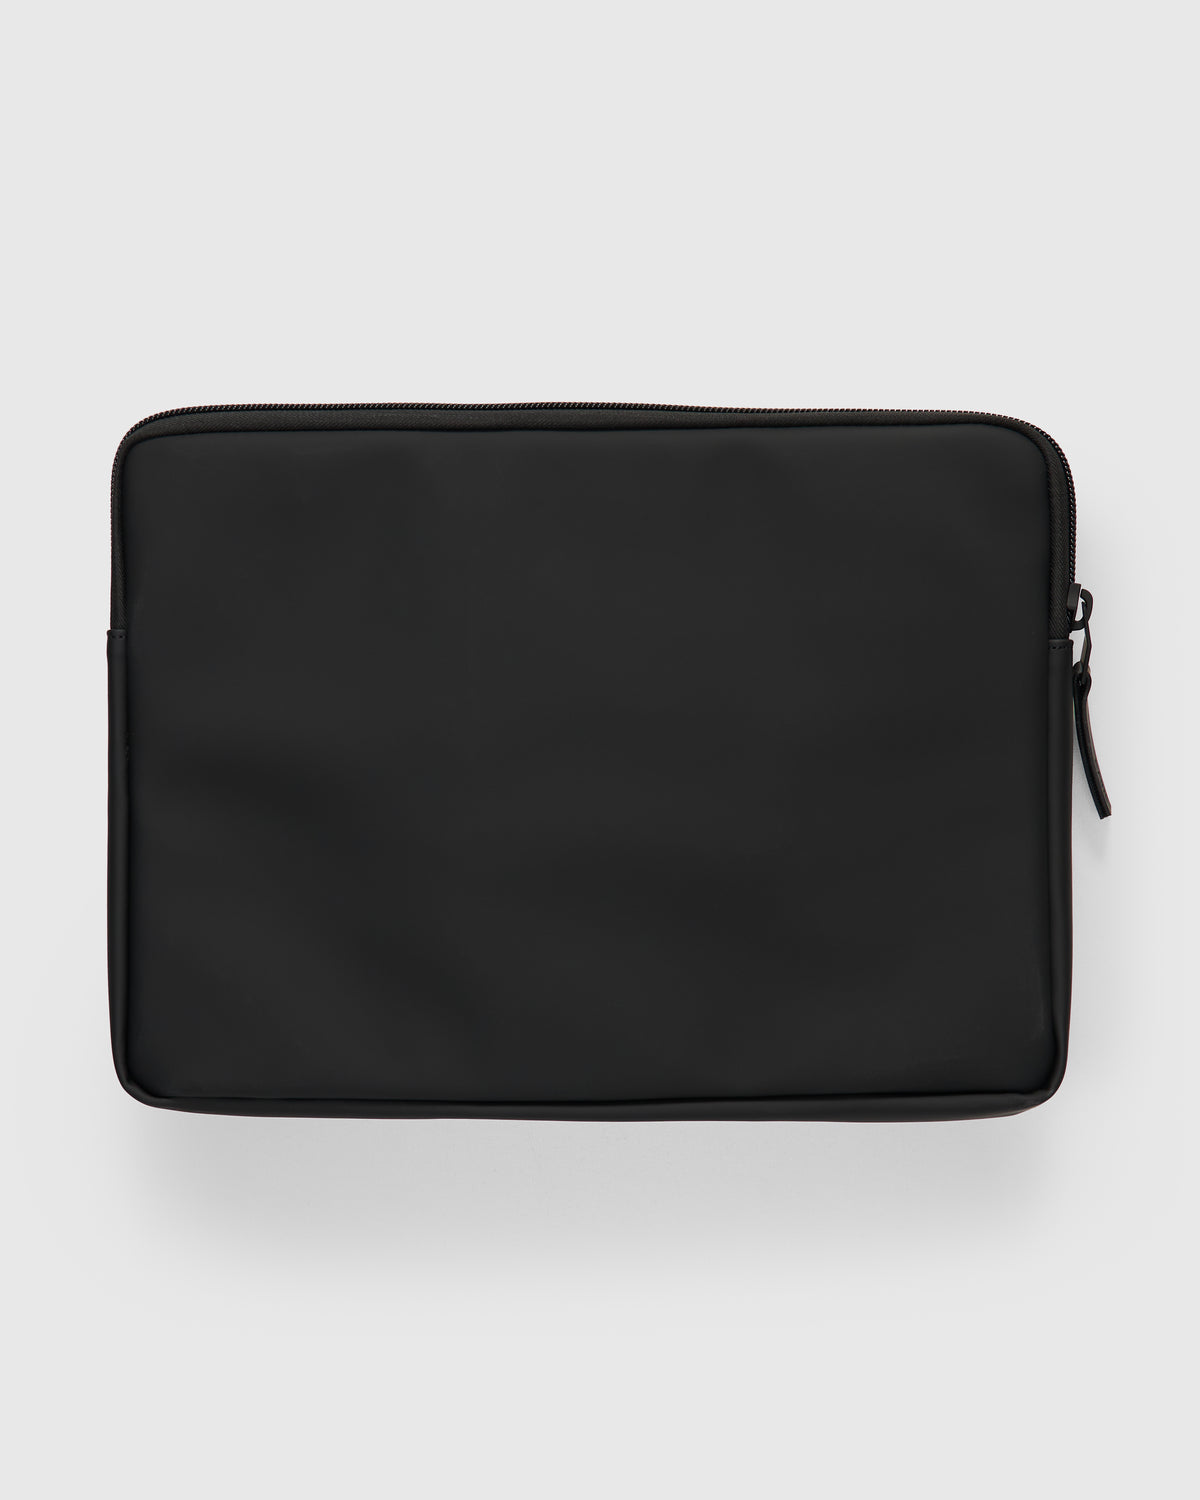 Texel Laptop Case 15" / 16" in Black